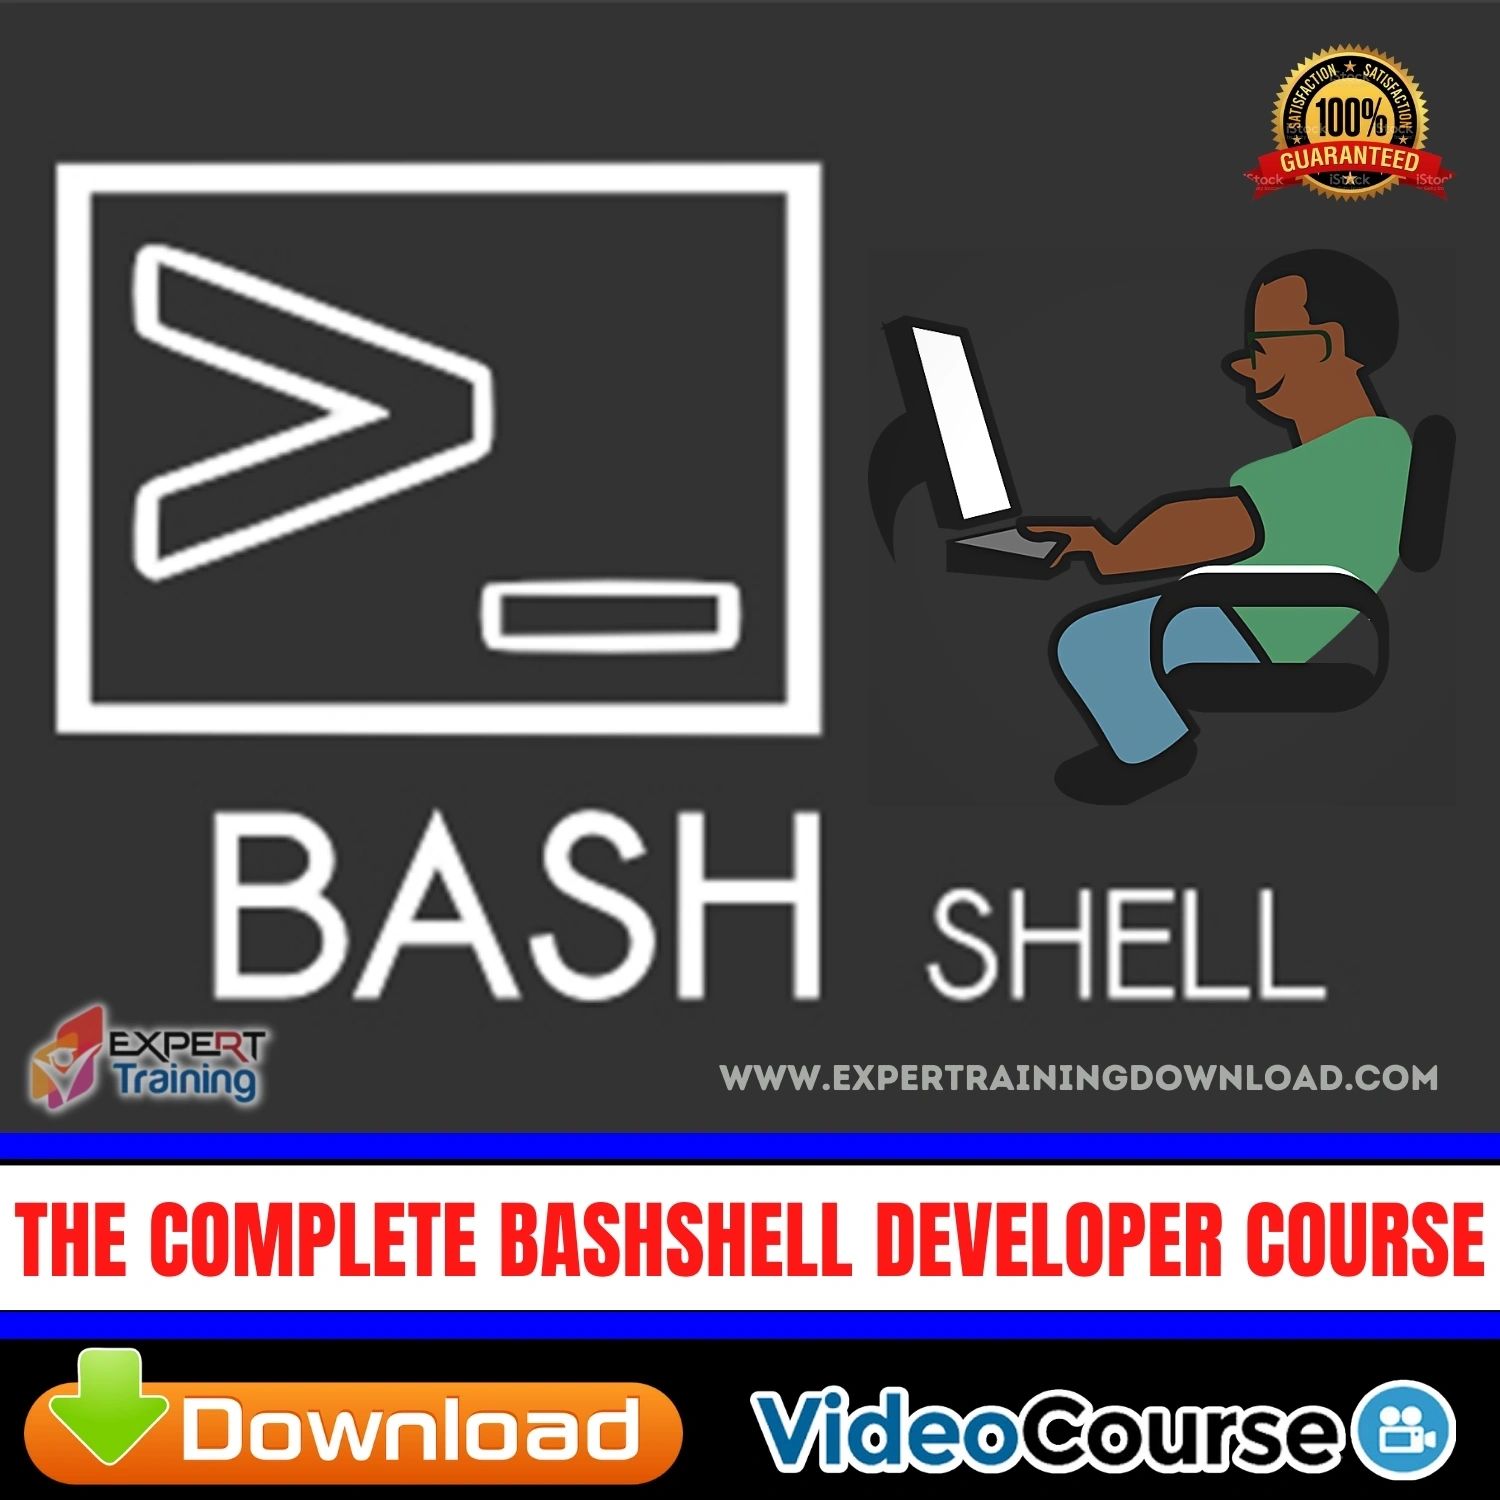 The Complete Bash Shell Developer Course